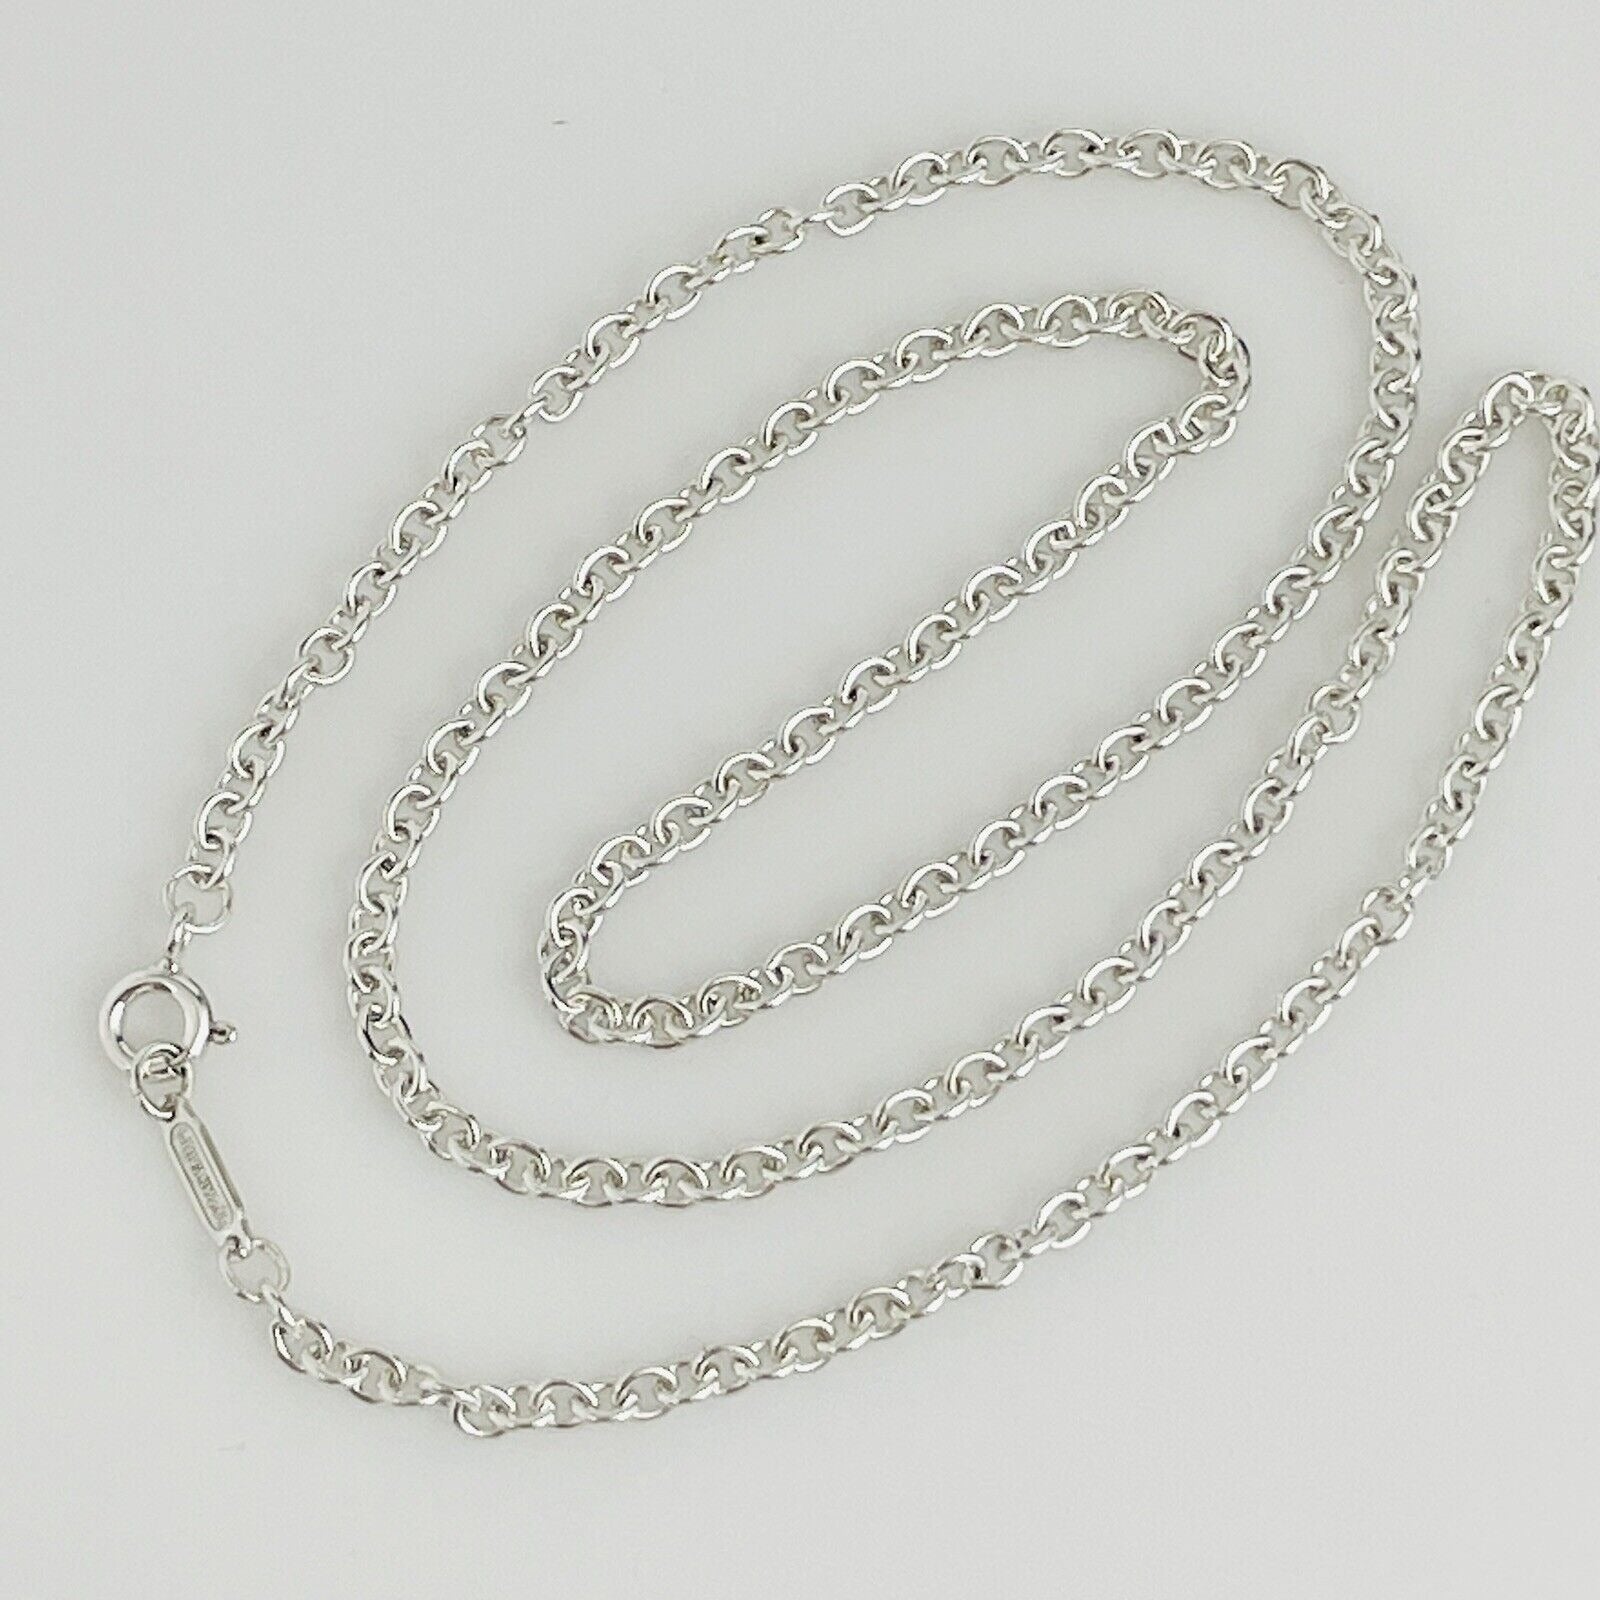 Tiffany chain (gold) with Tiffany link closure - ANAMAE jewelry